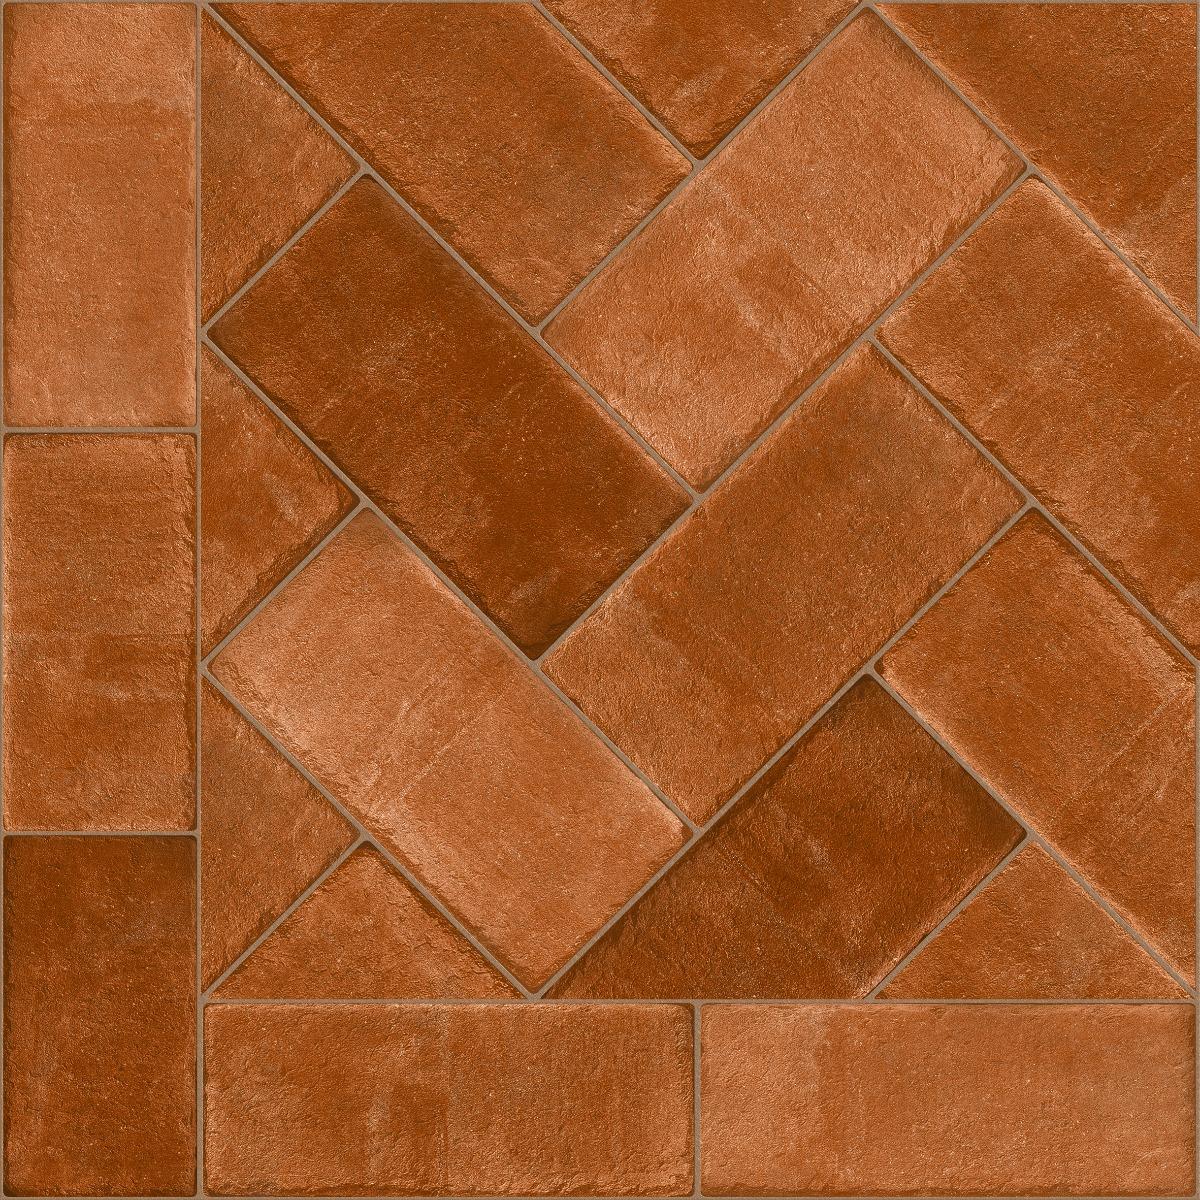 Floor Tiles for Bathroom Tiles, Living Room Tiles, Bedroom Tiles, Accent Tiles, Hospital Tiles, Bar/Restaurant, Commercial/Office, Outdoor Area